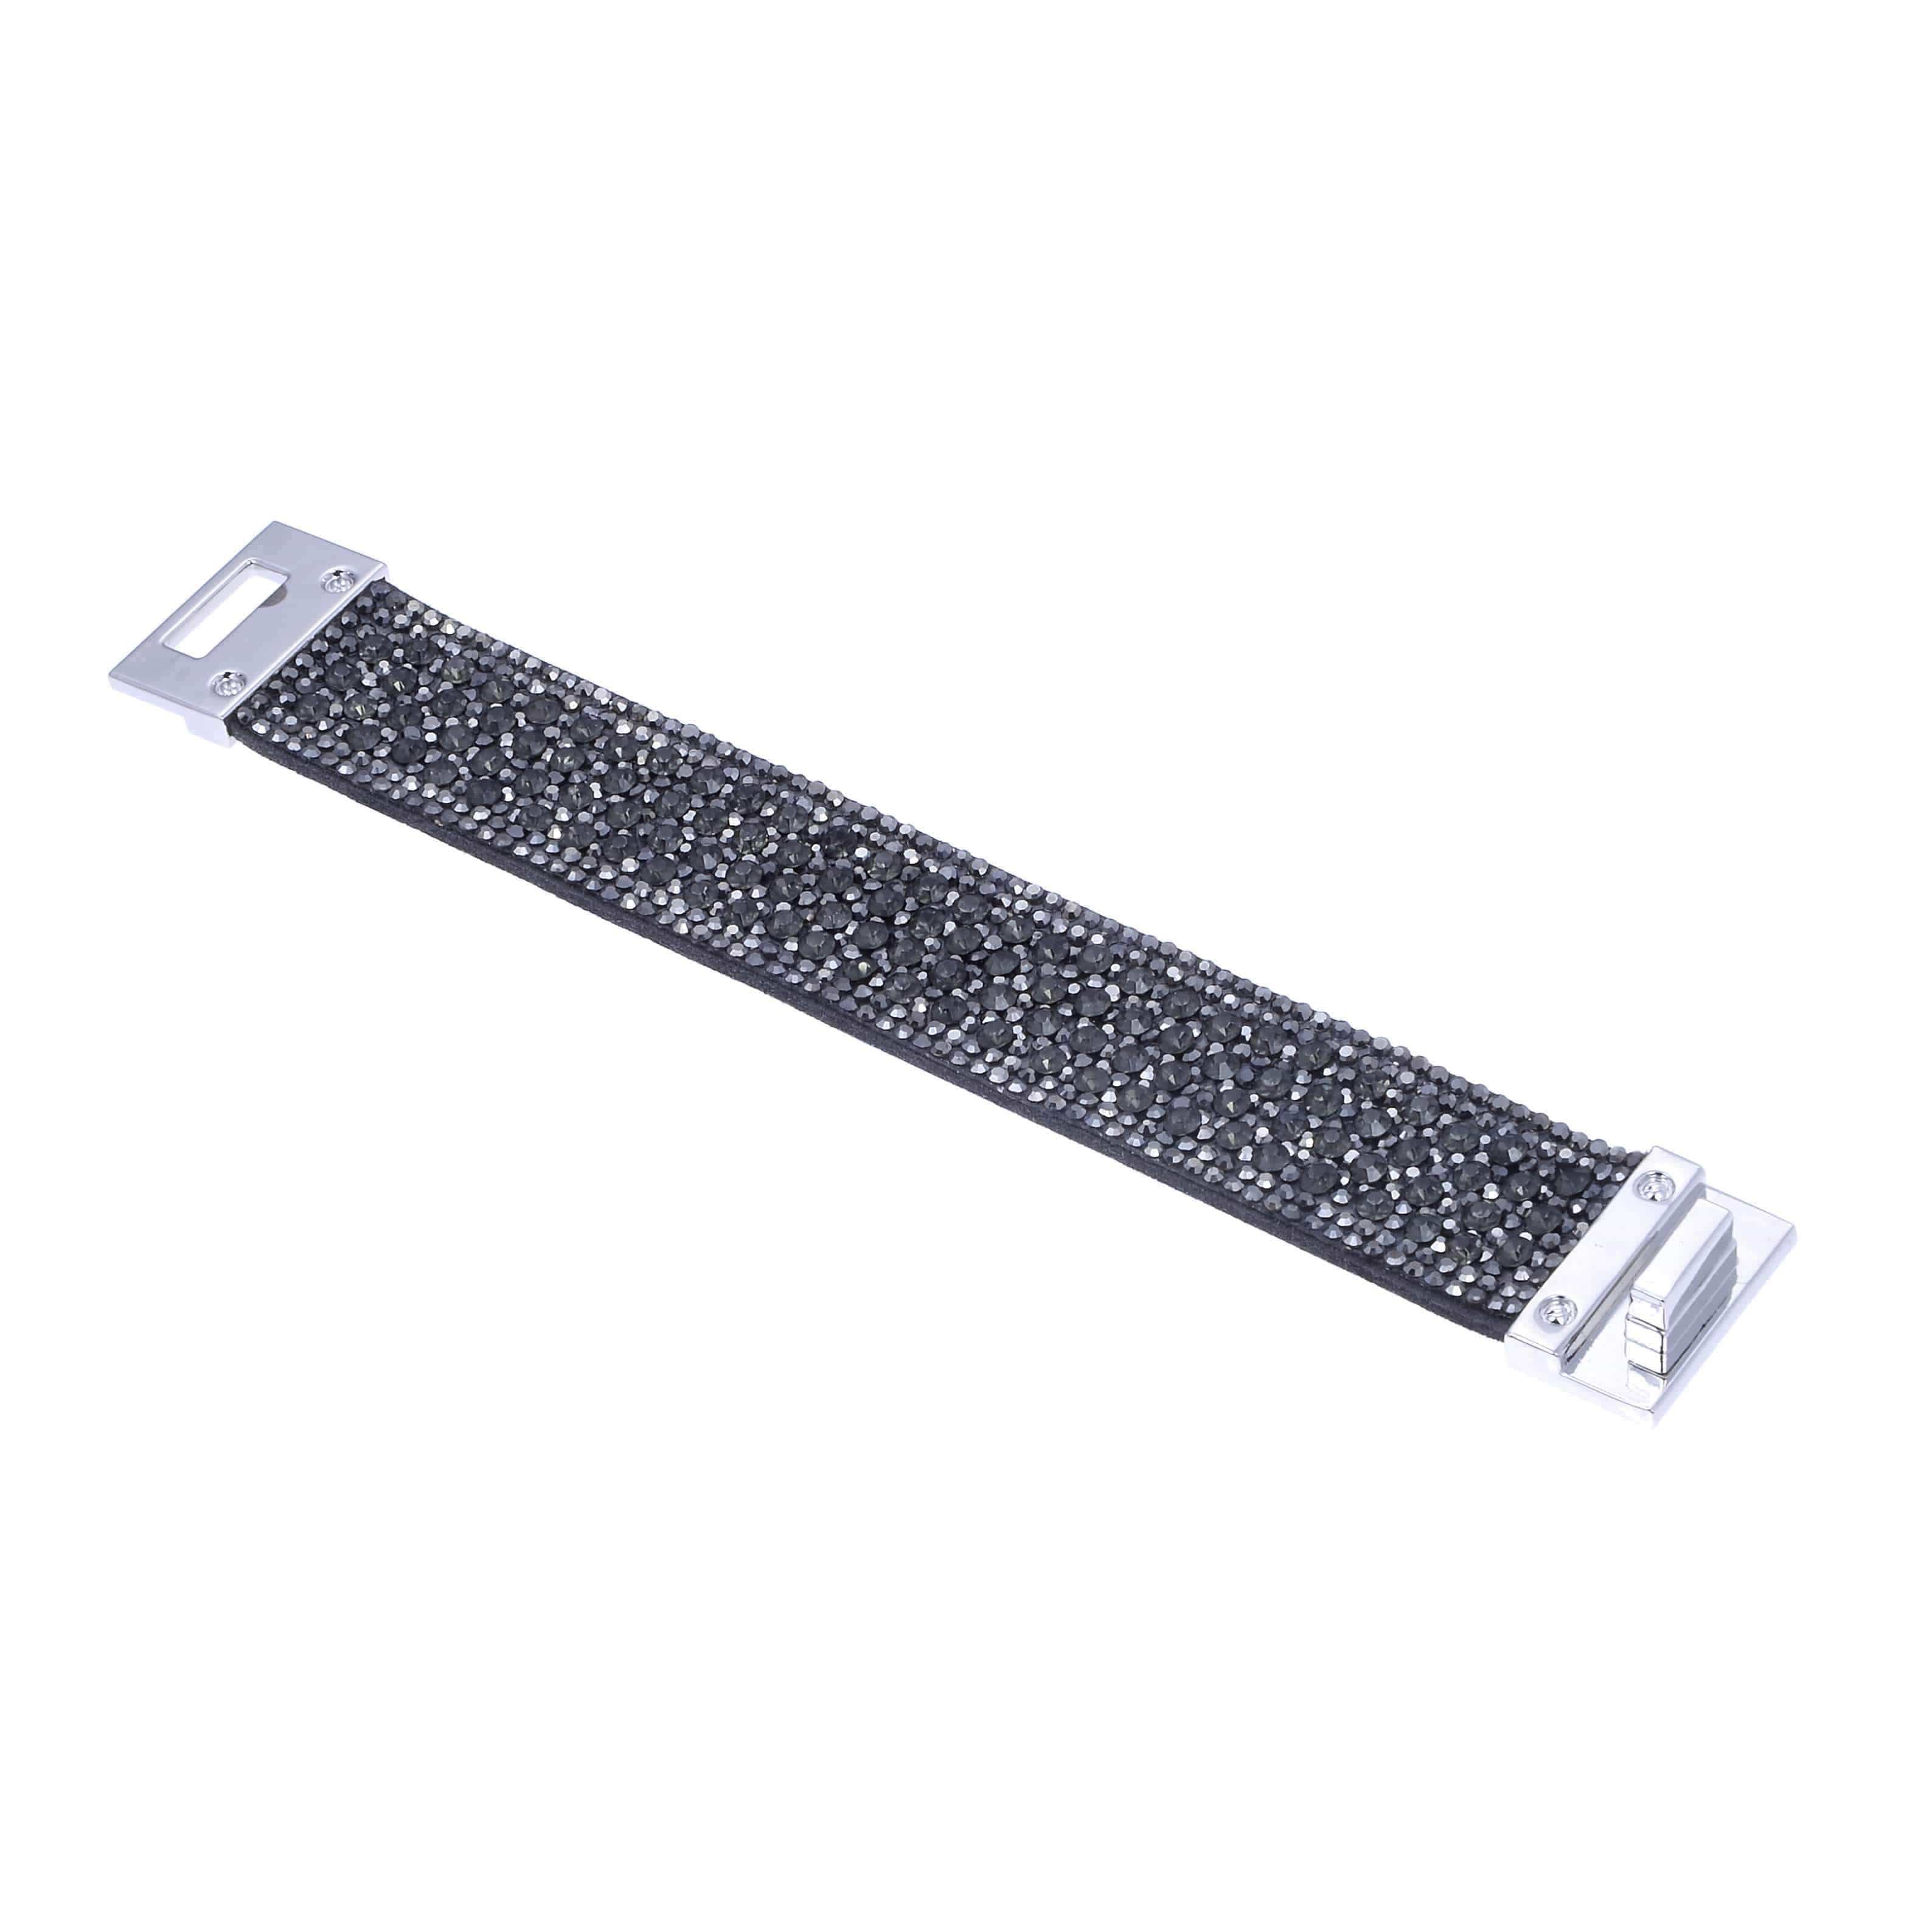 Short Swarovski Crystal Leather Band Bracelet Gray with Toggle Lock